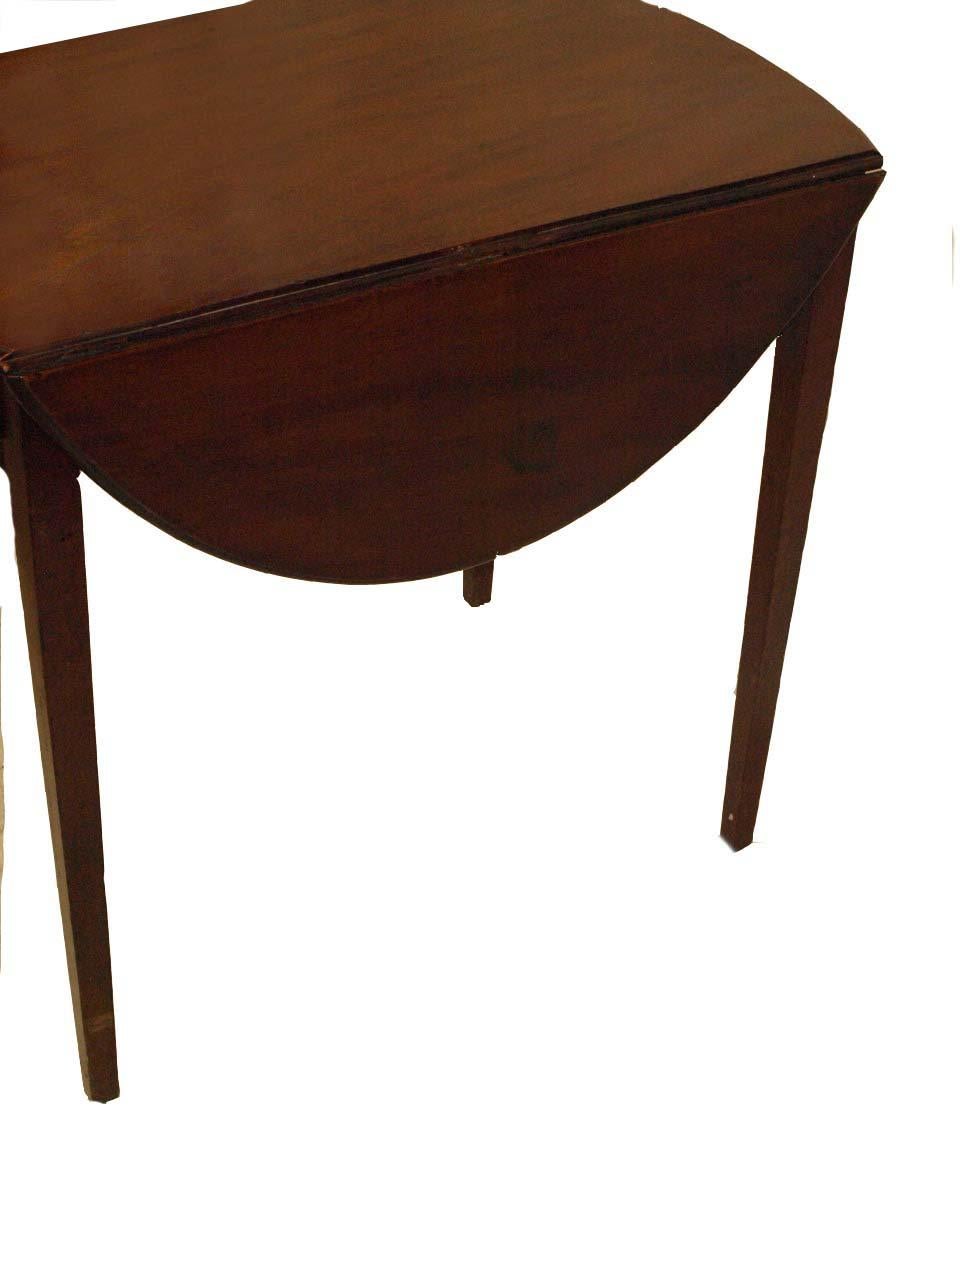 English Oval Hepplewhite Pembroke Table For Sale